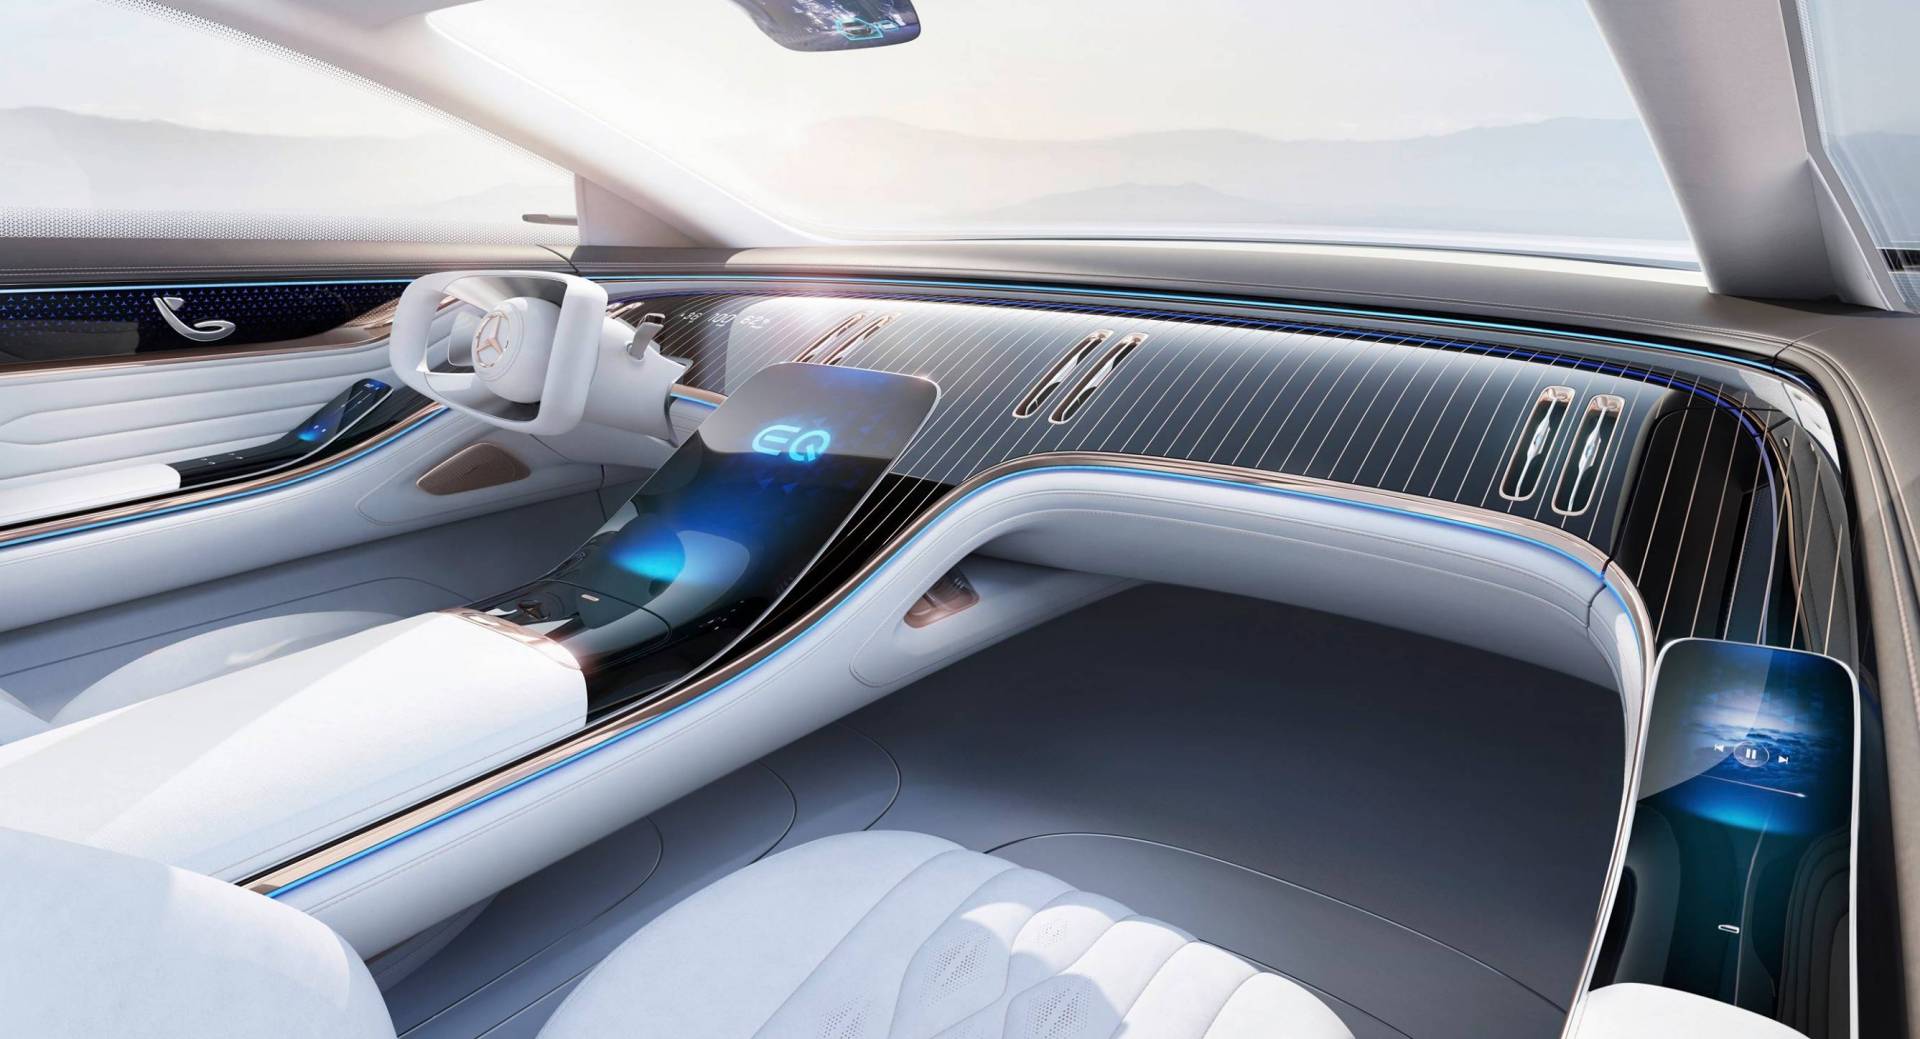 New Mercedes-Benz EQS Study Reveals Futuristic, Lounge-Like Interior